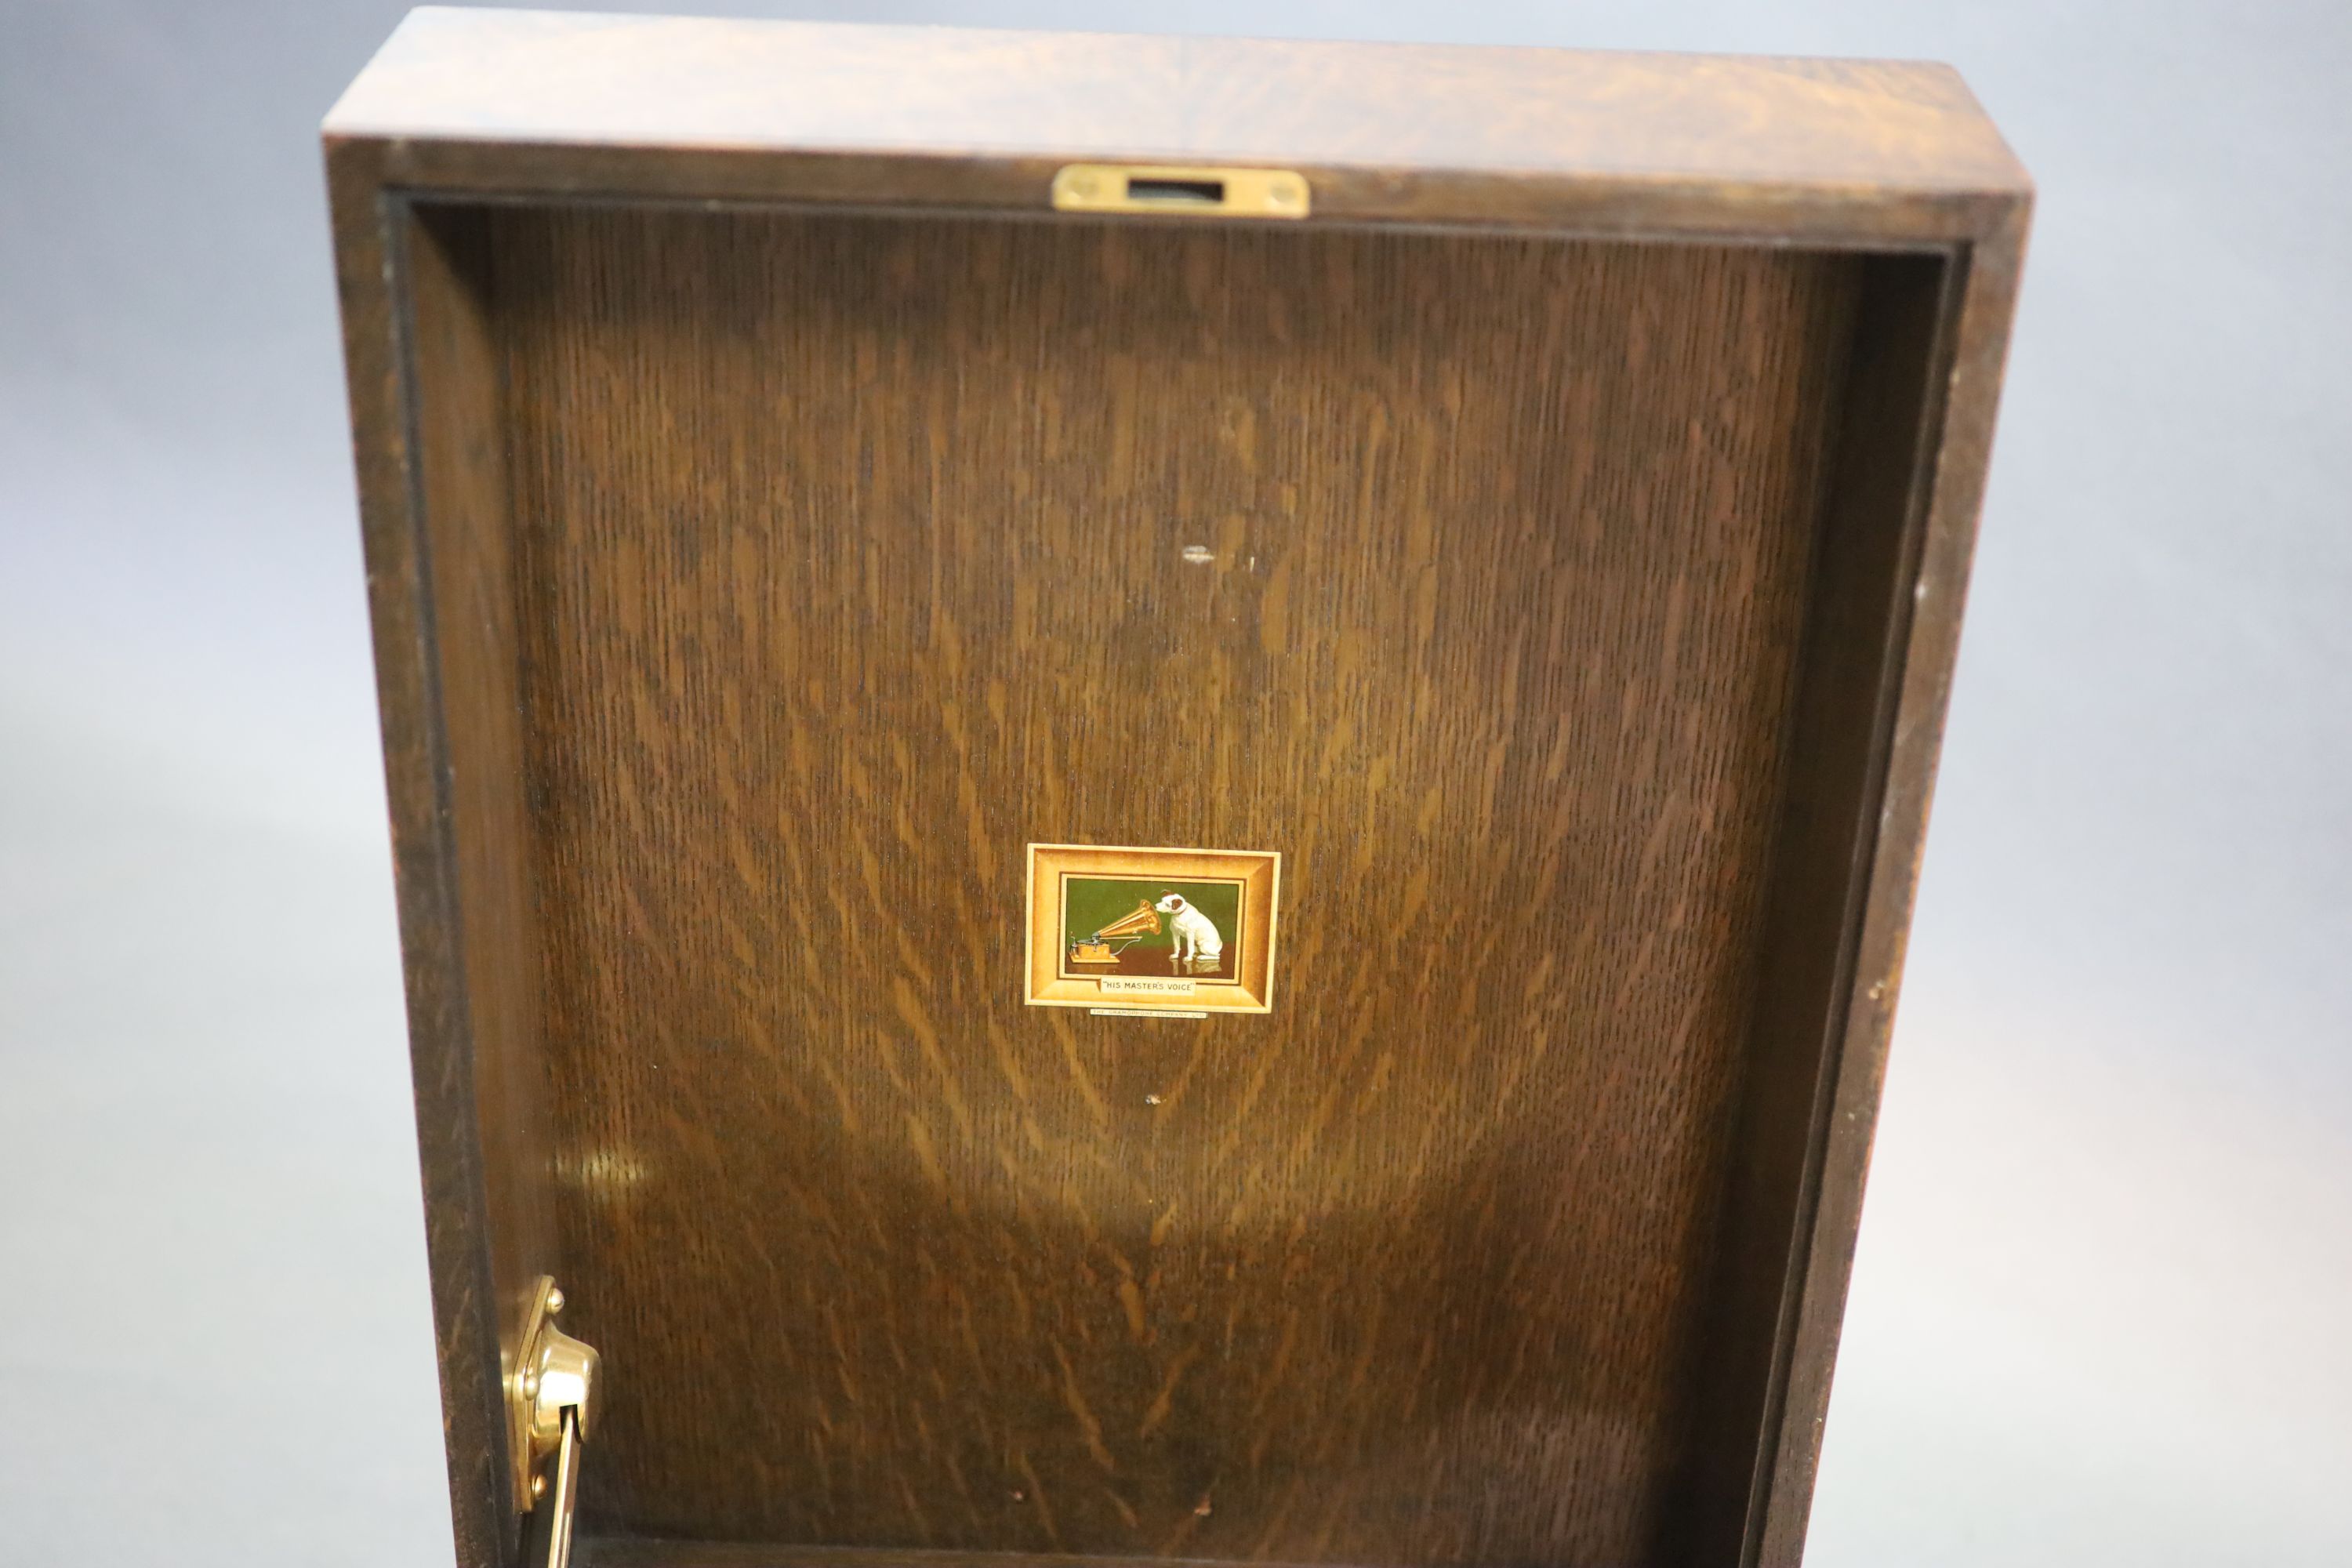 A HMV Lumiere model oak cased 460 gramophone, c1925, closed measurements 42cm wide, 55cm deep, 27cm high.